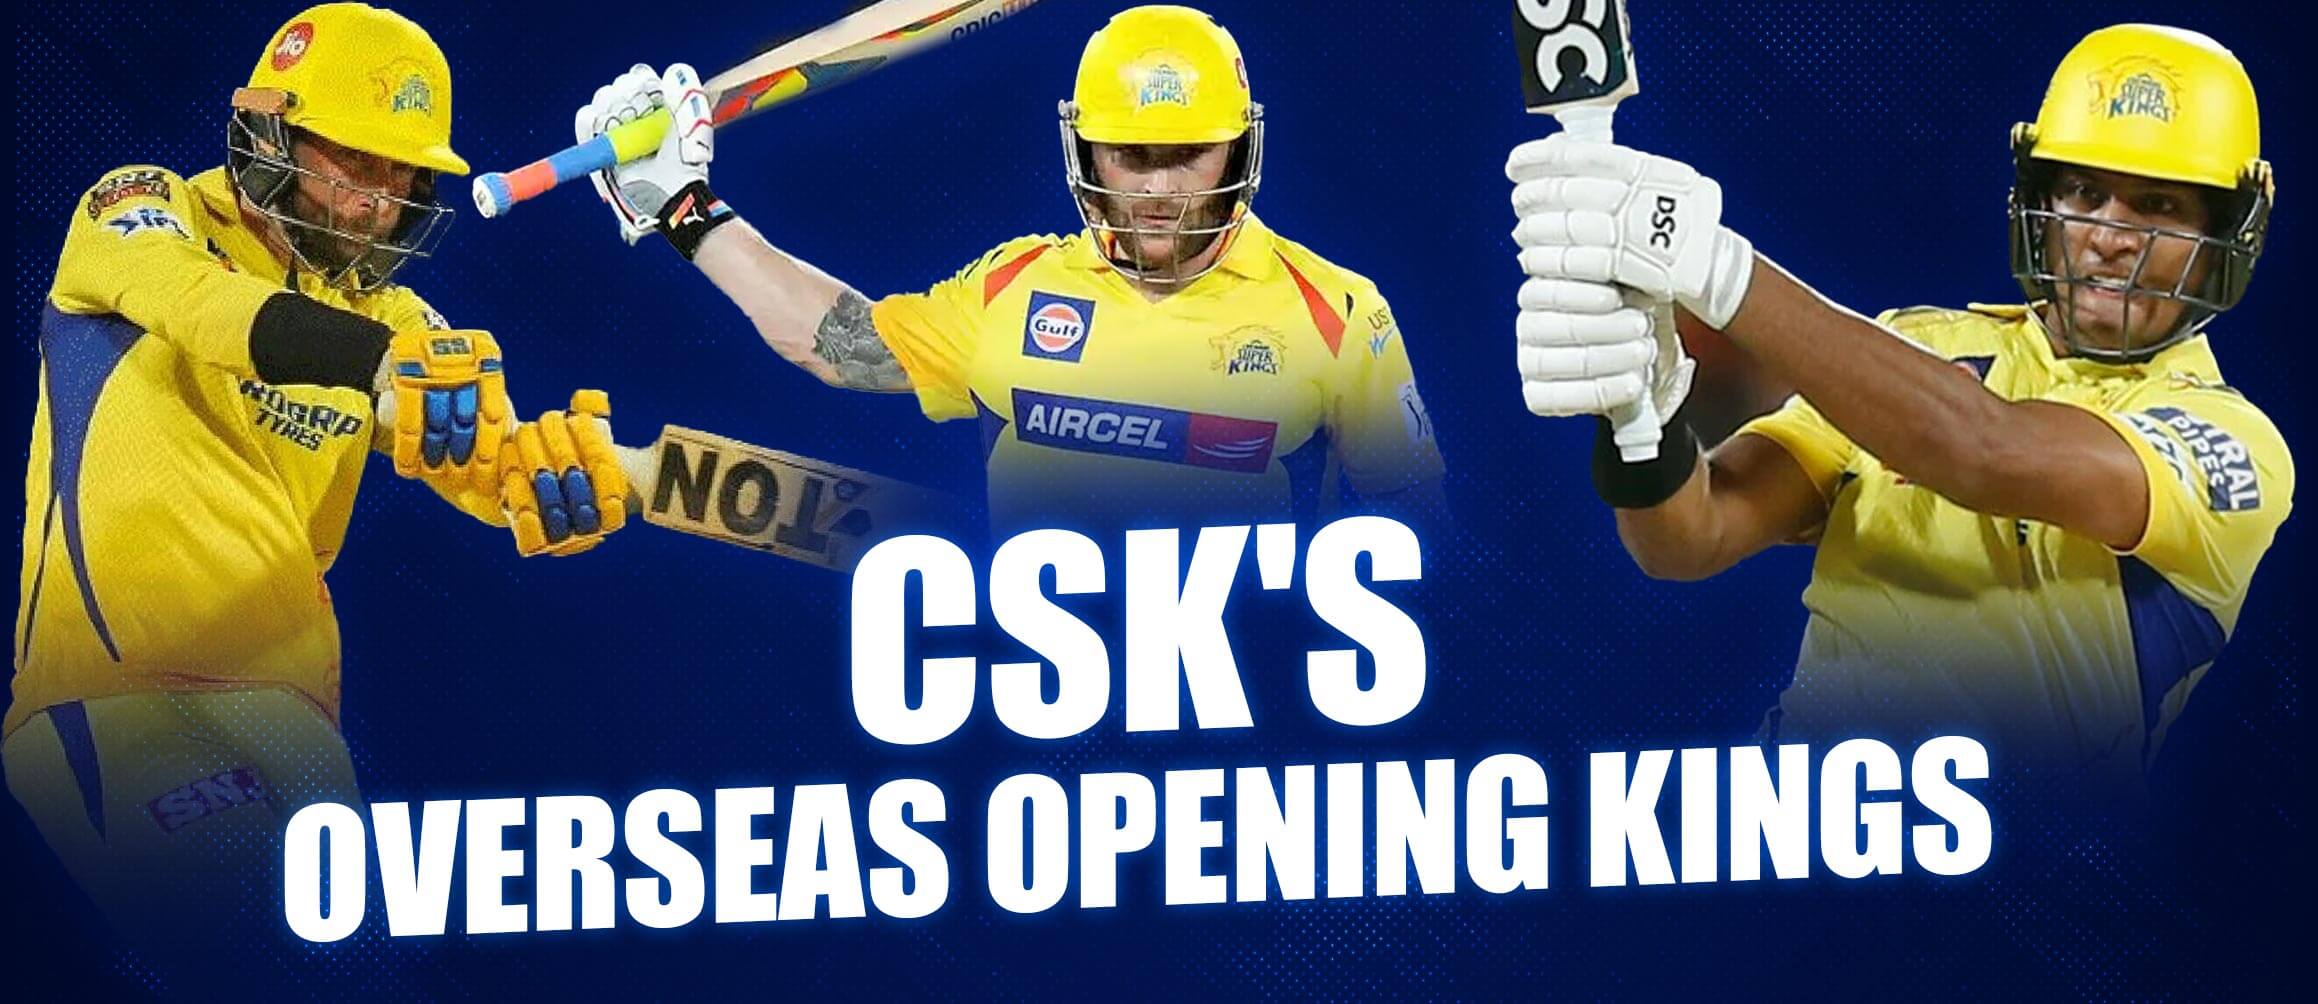 CSK’s Overseas Opening Kings